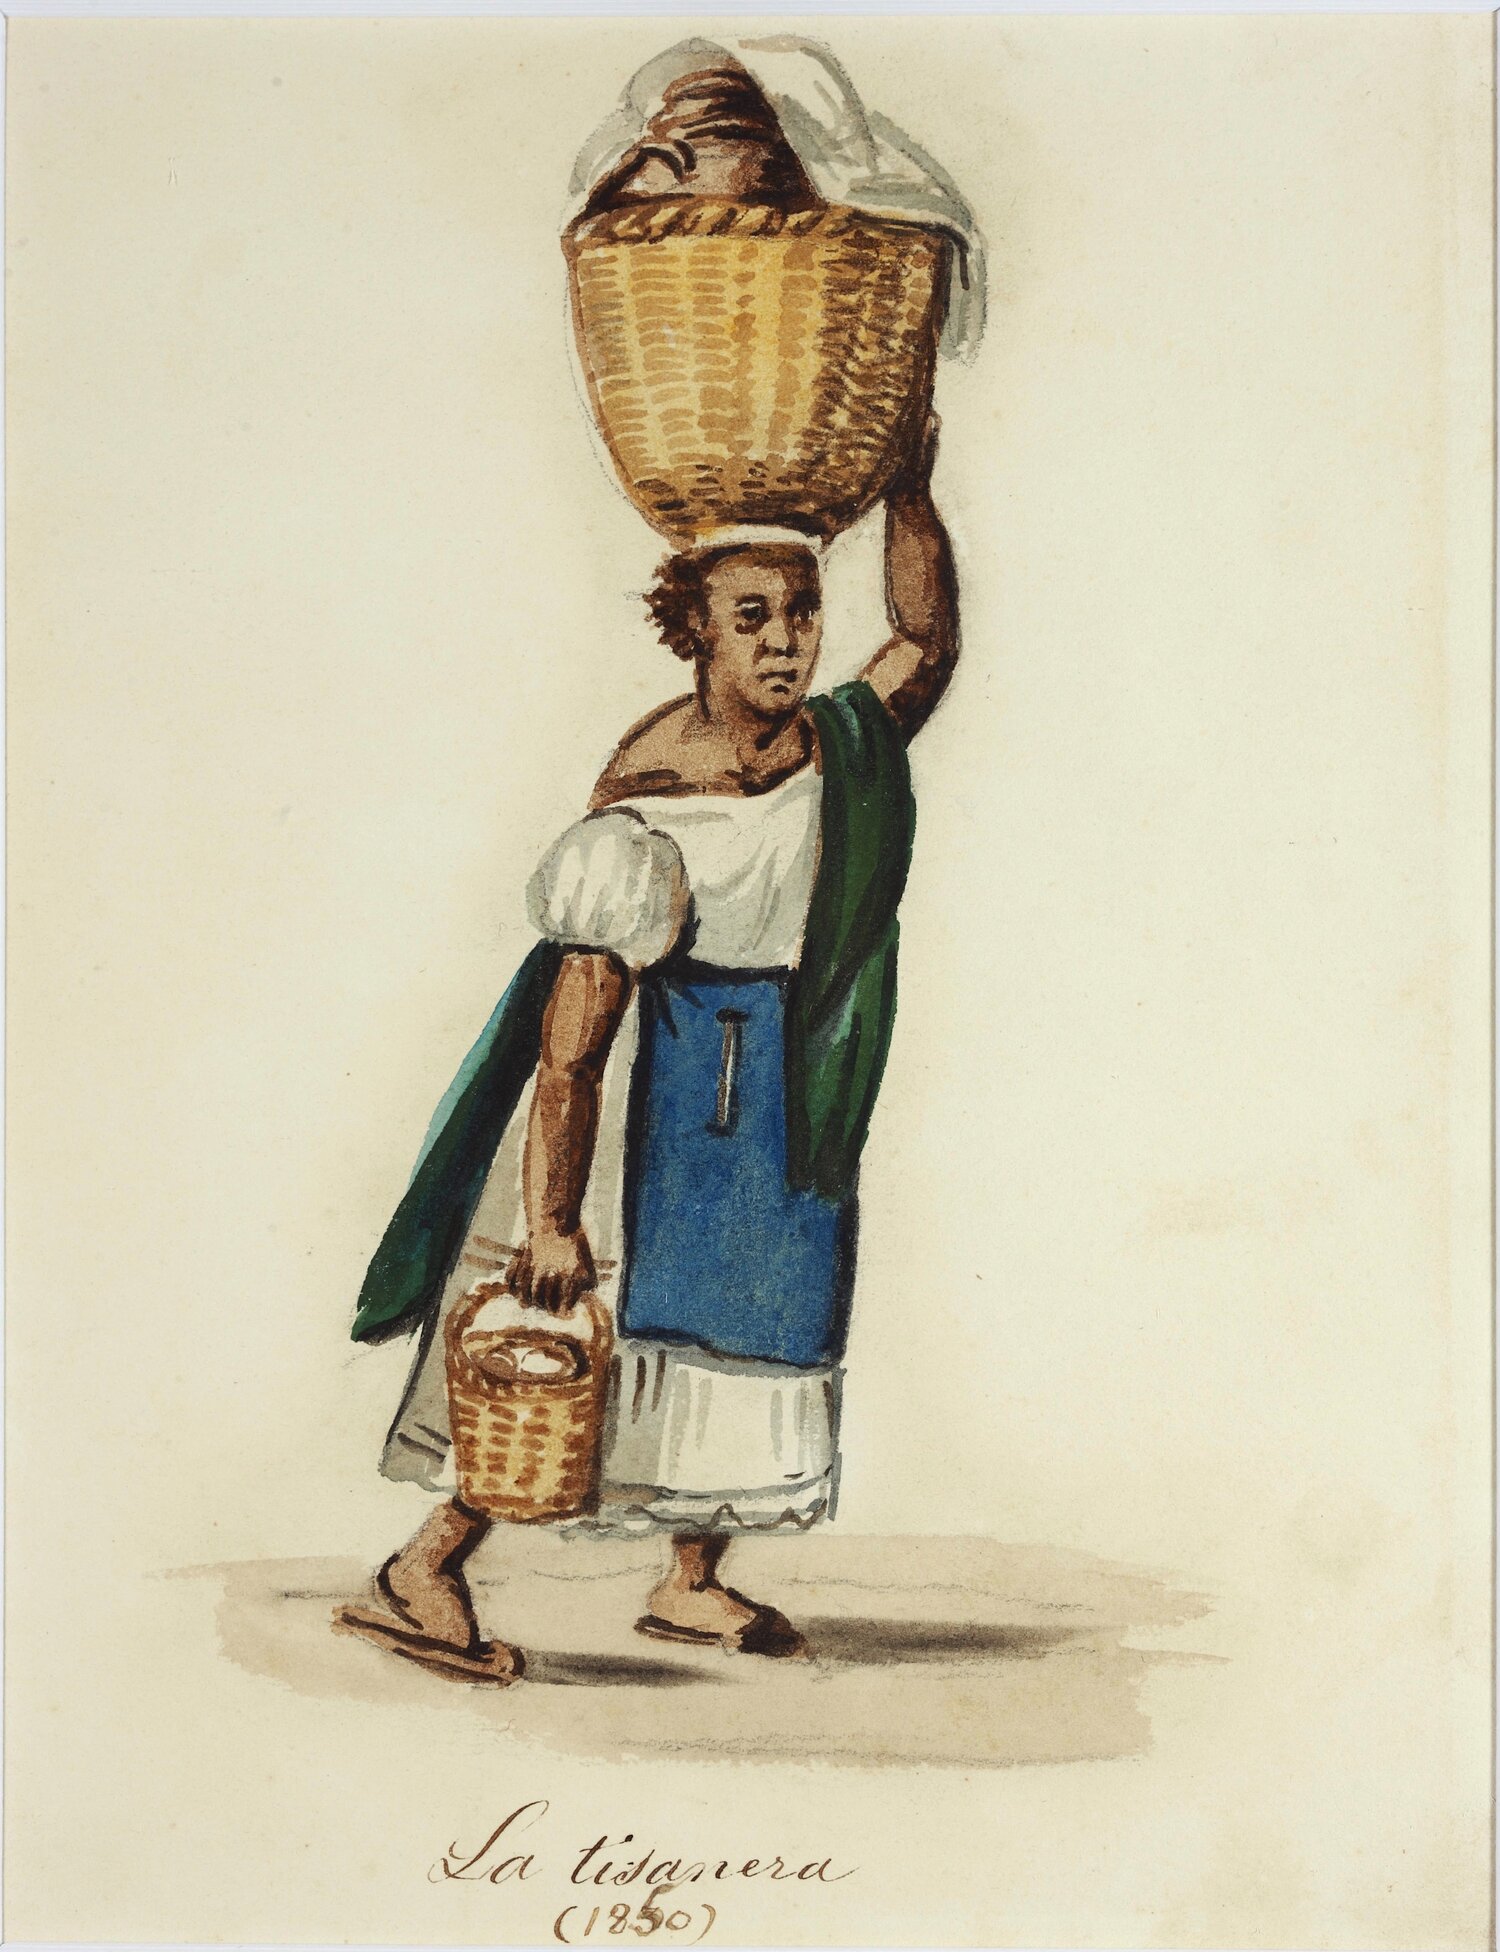 La Tisanera (1850) by Pancho Fierro. Via Wikimedia Commons.